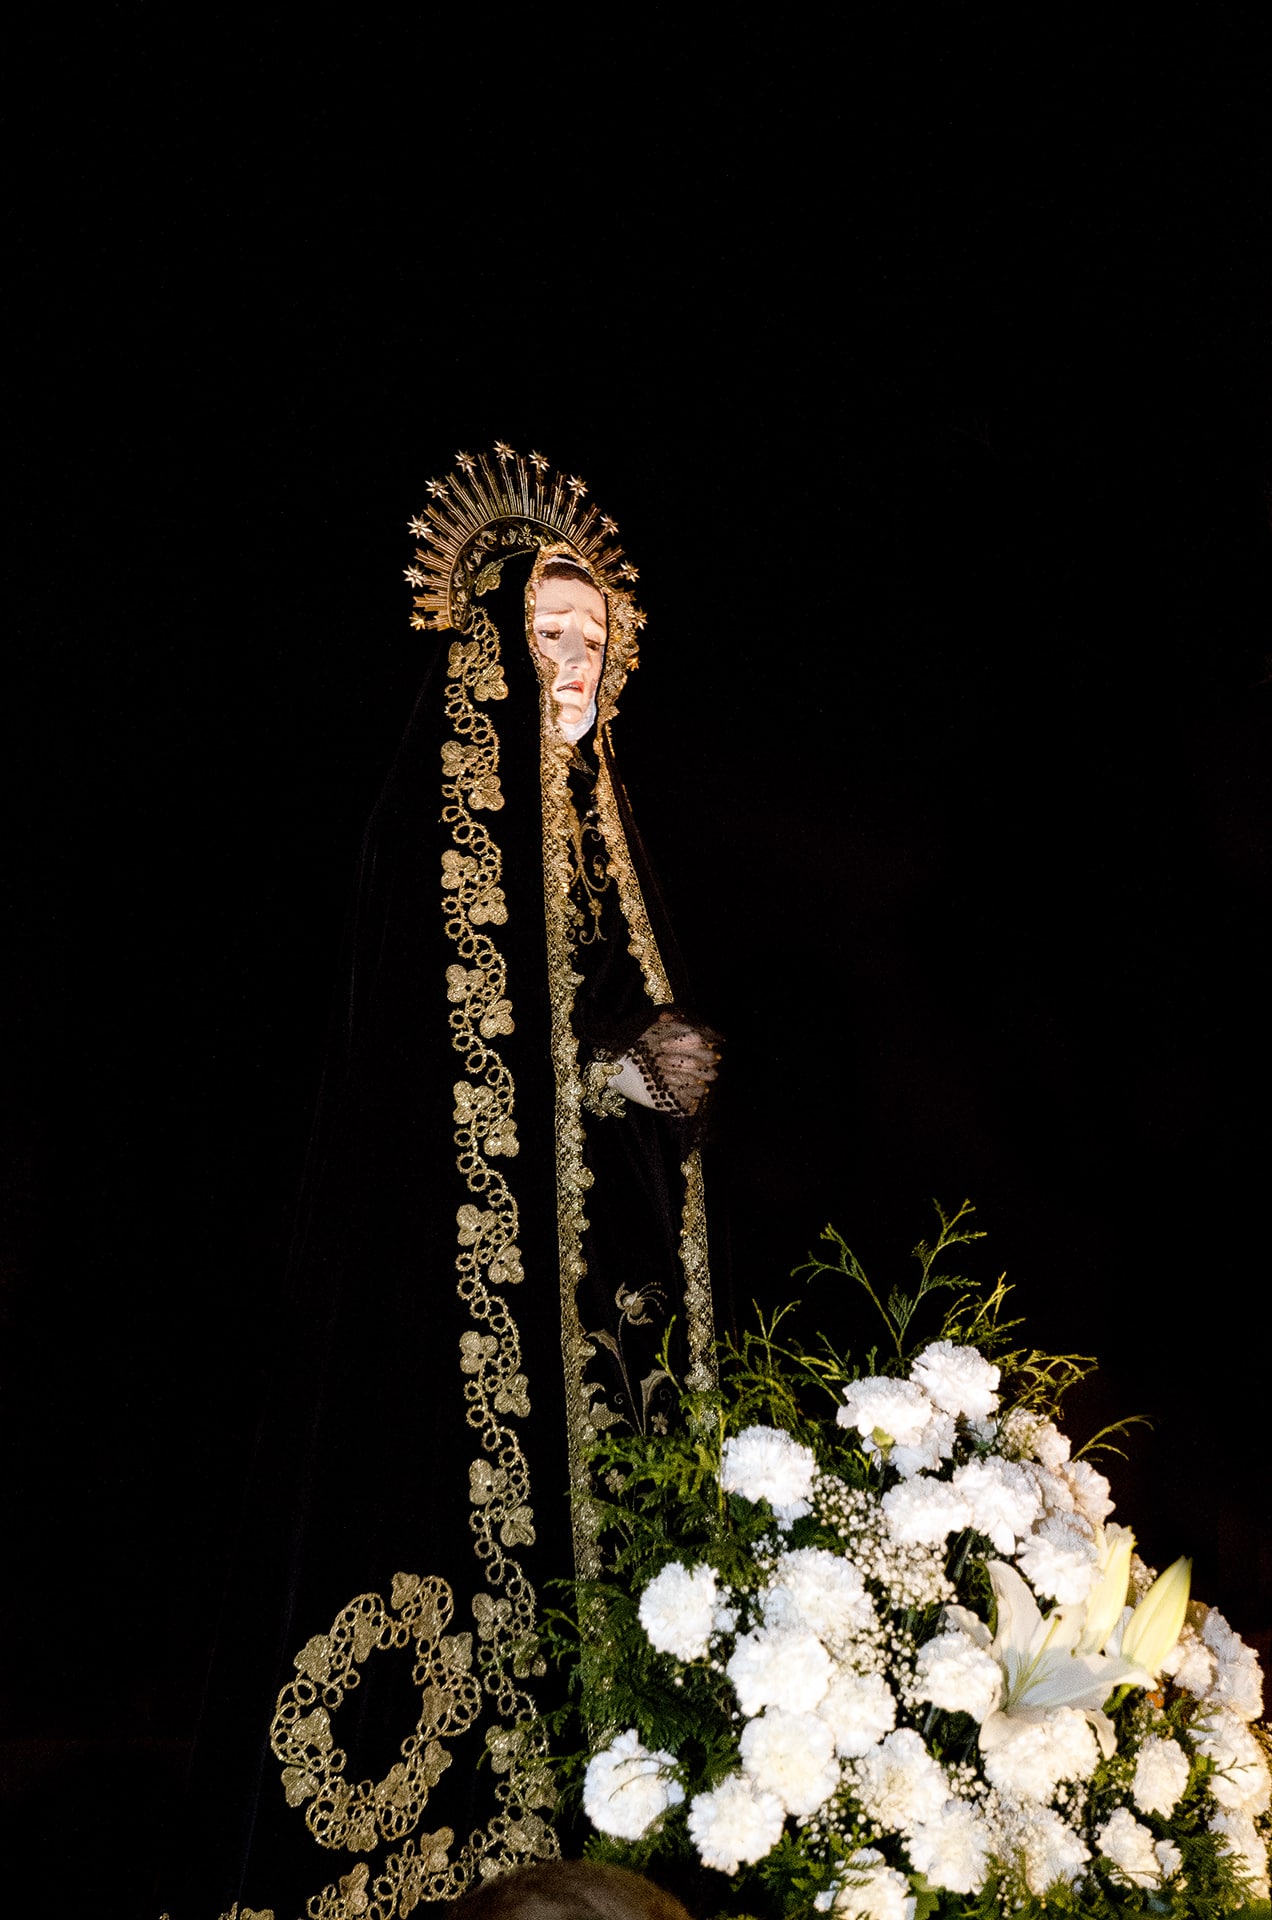 Vía Crucis San Justo, Segovia 2